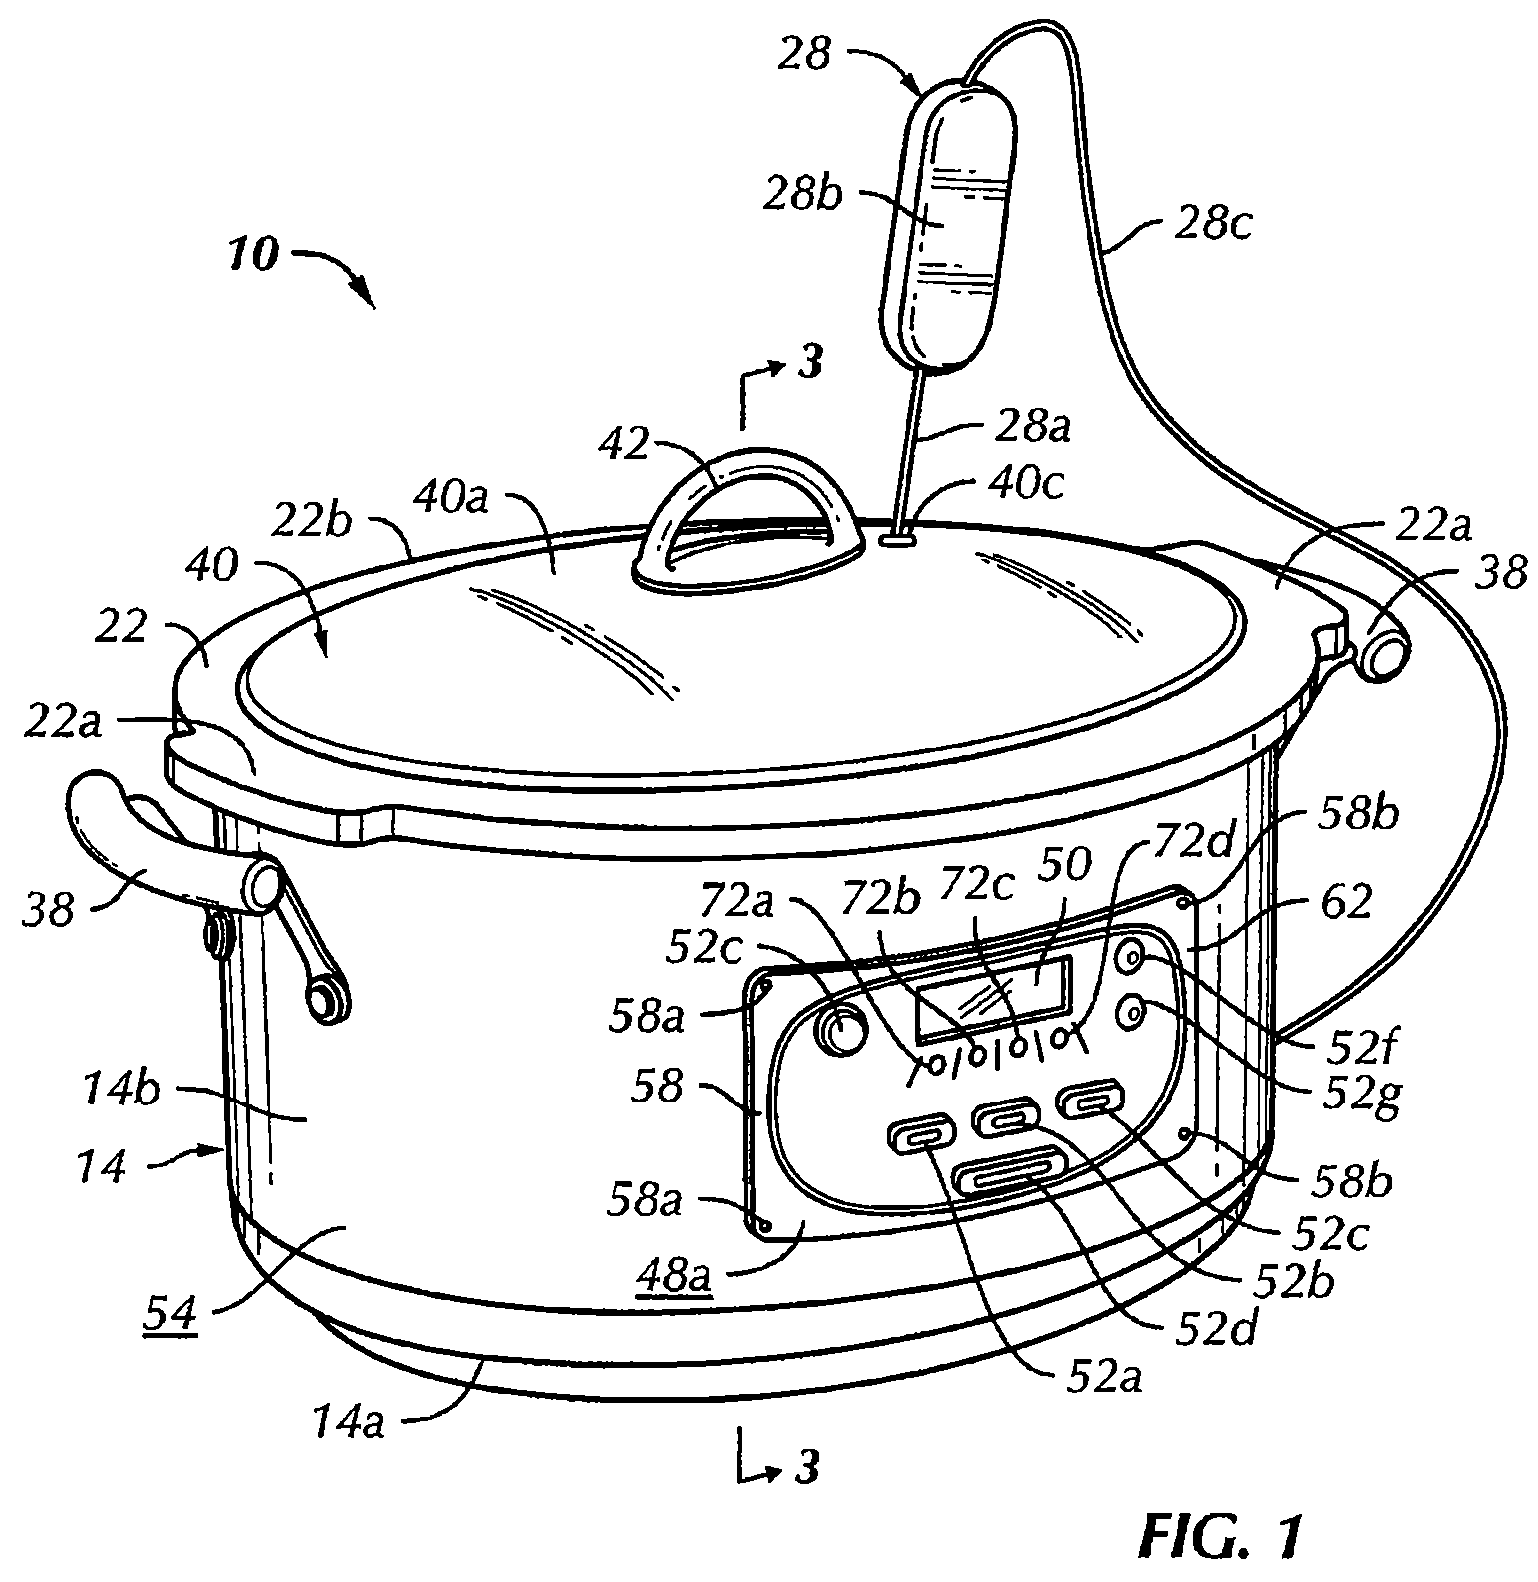 patent illustration for slow cooker